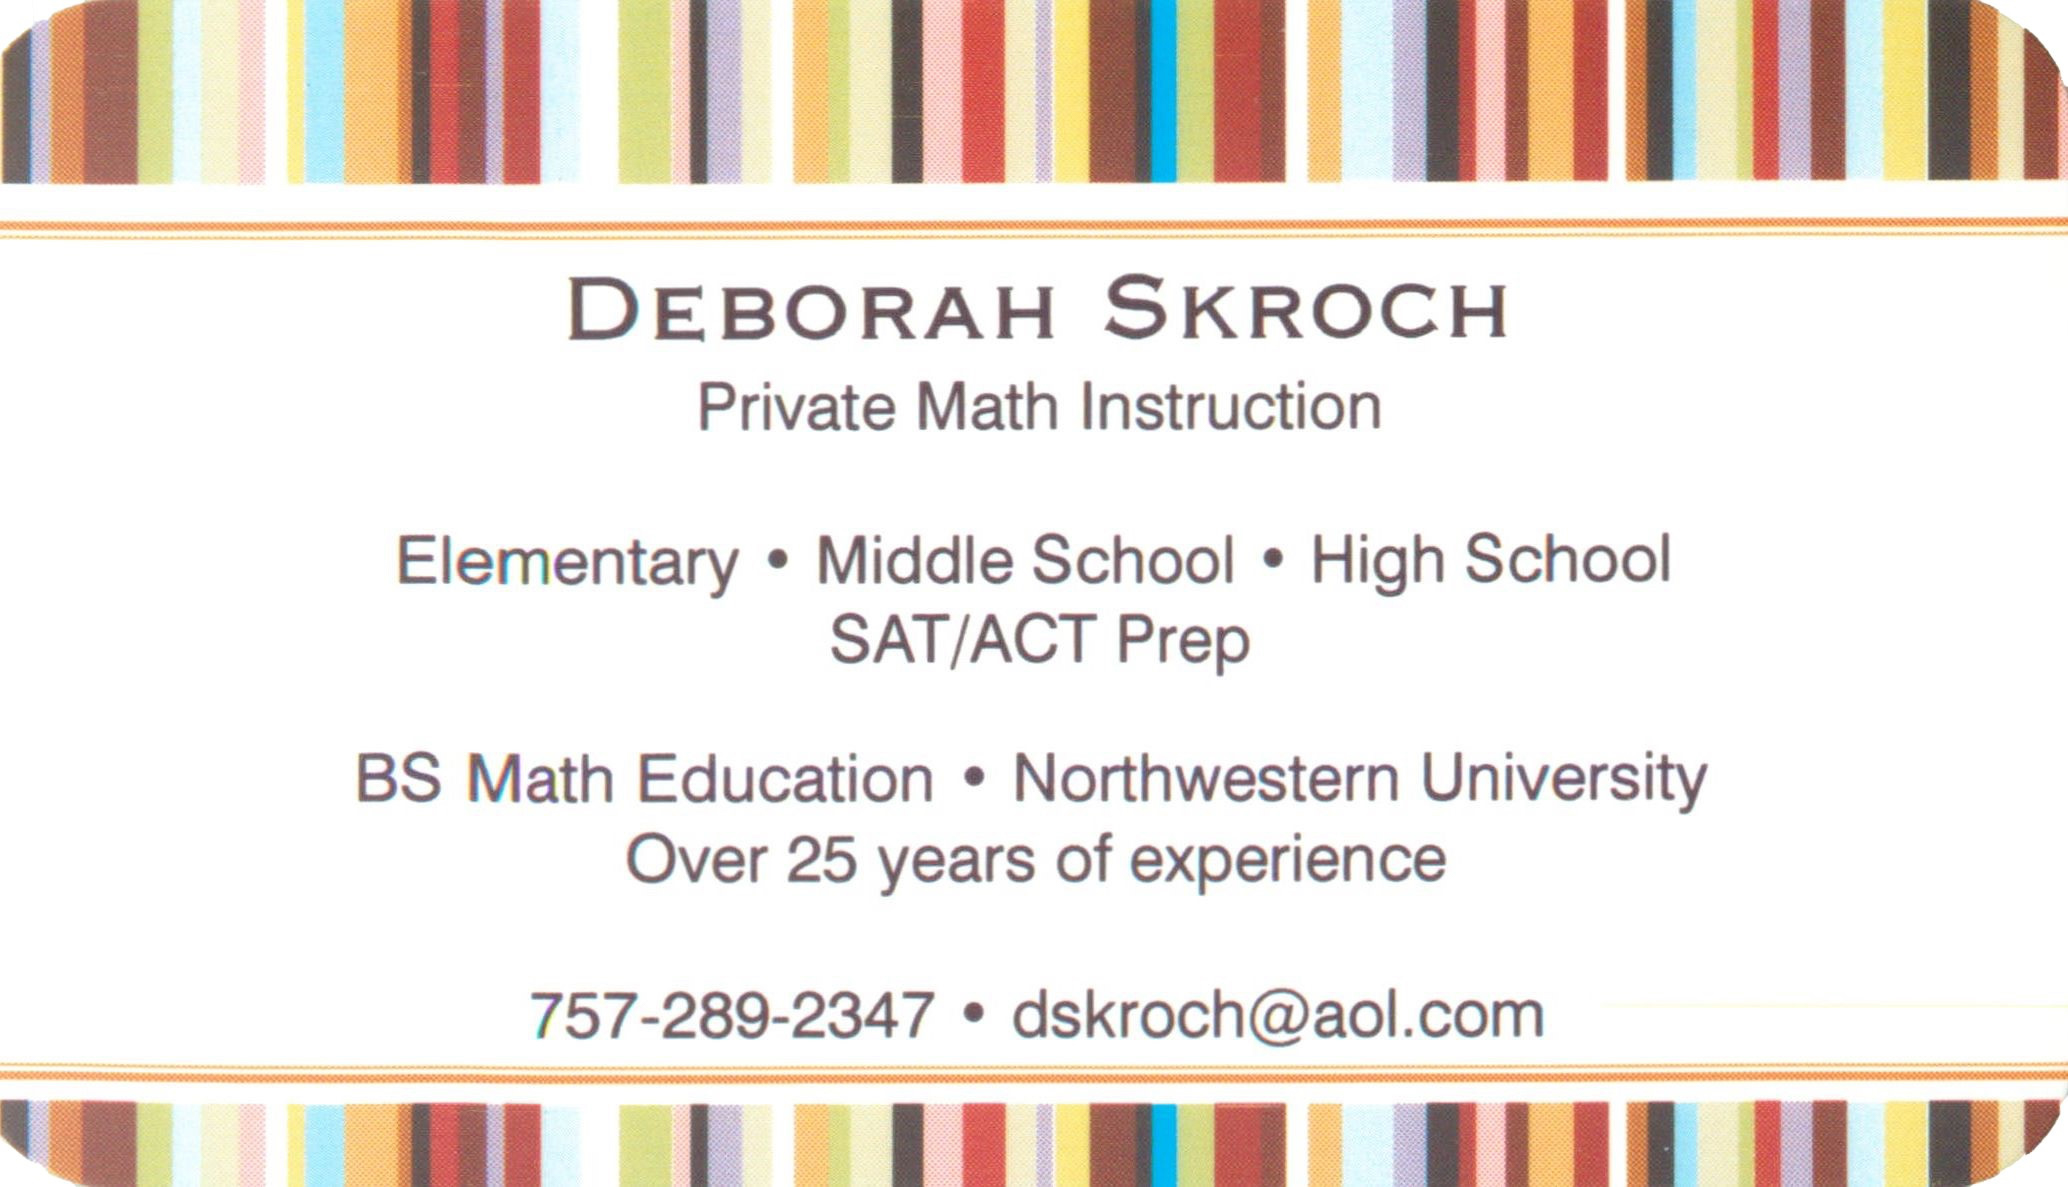 Private Math Instruction - Deborah Skroch